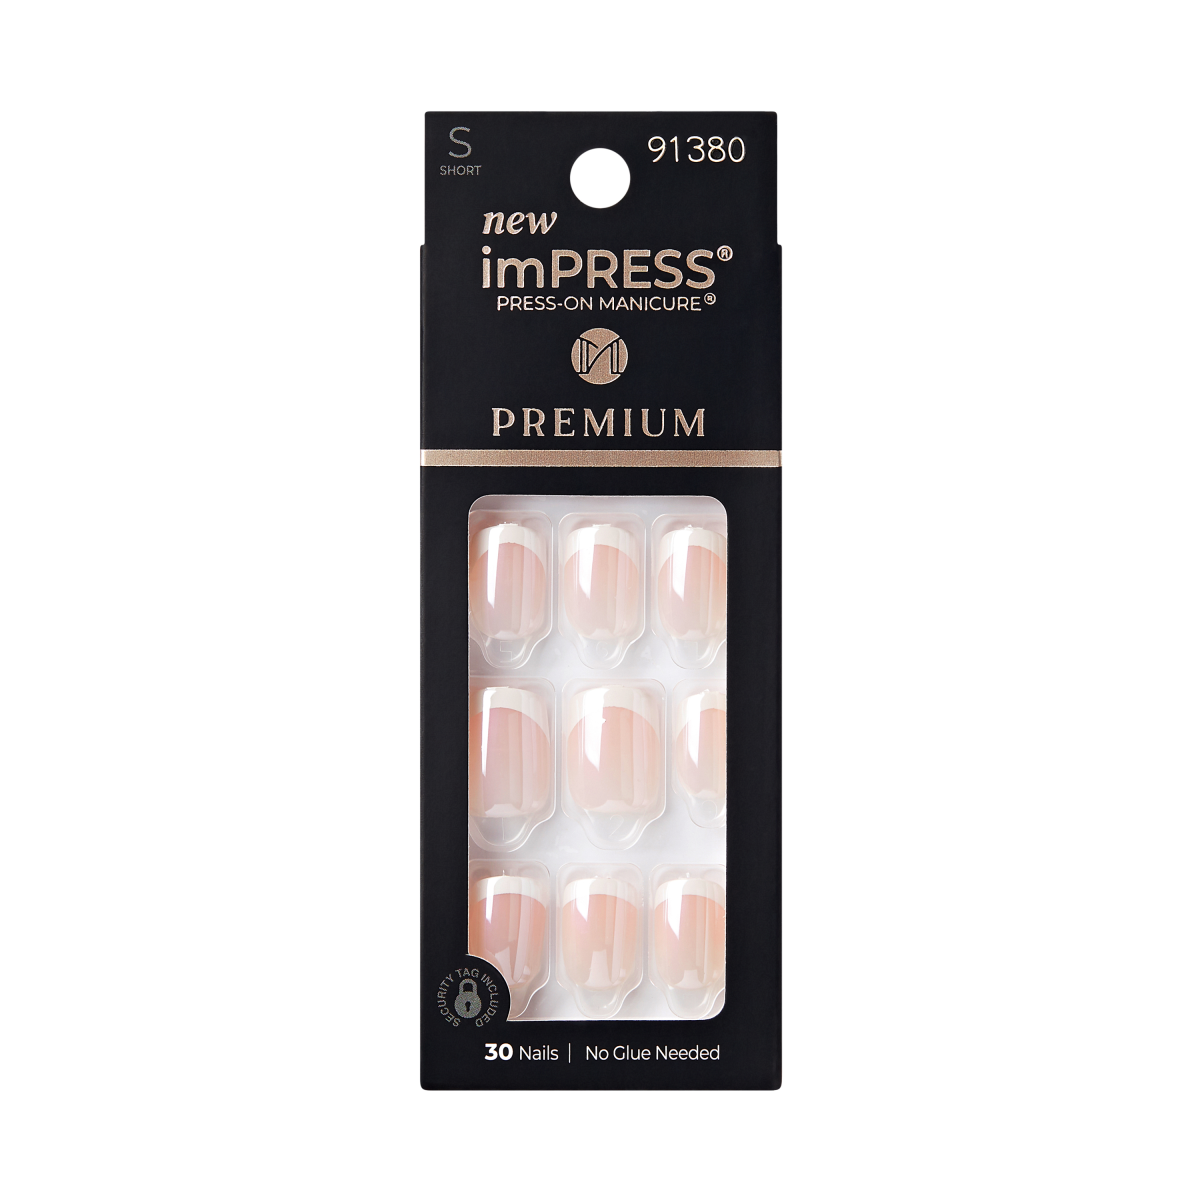 imPRESS Premium Press-On Manicure - Reputation